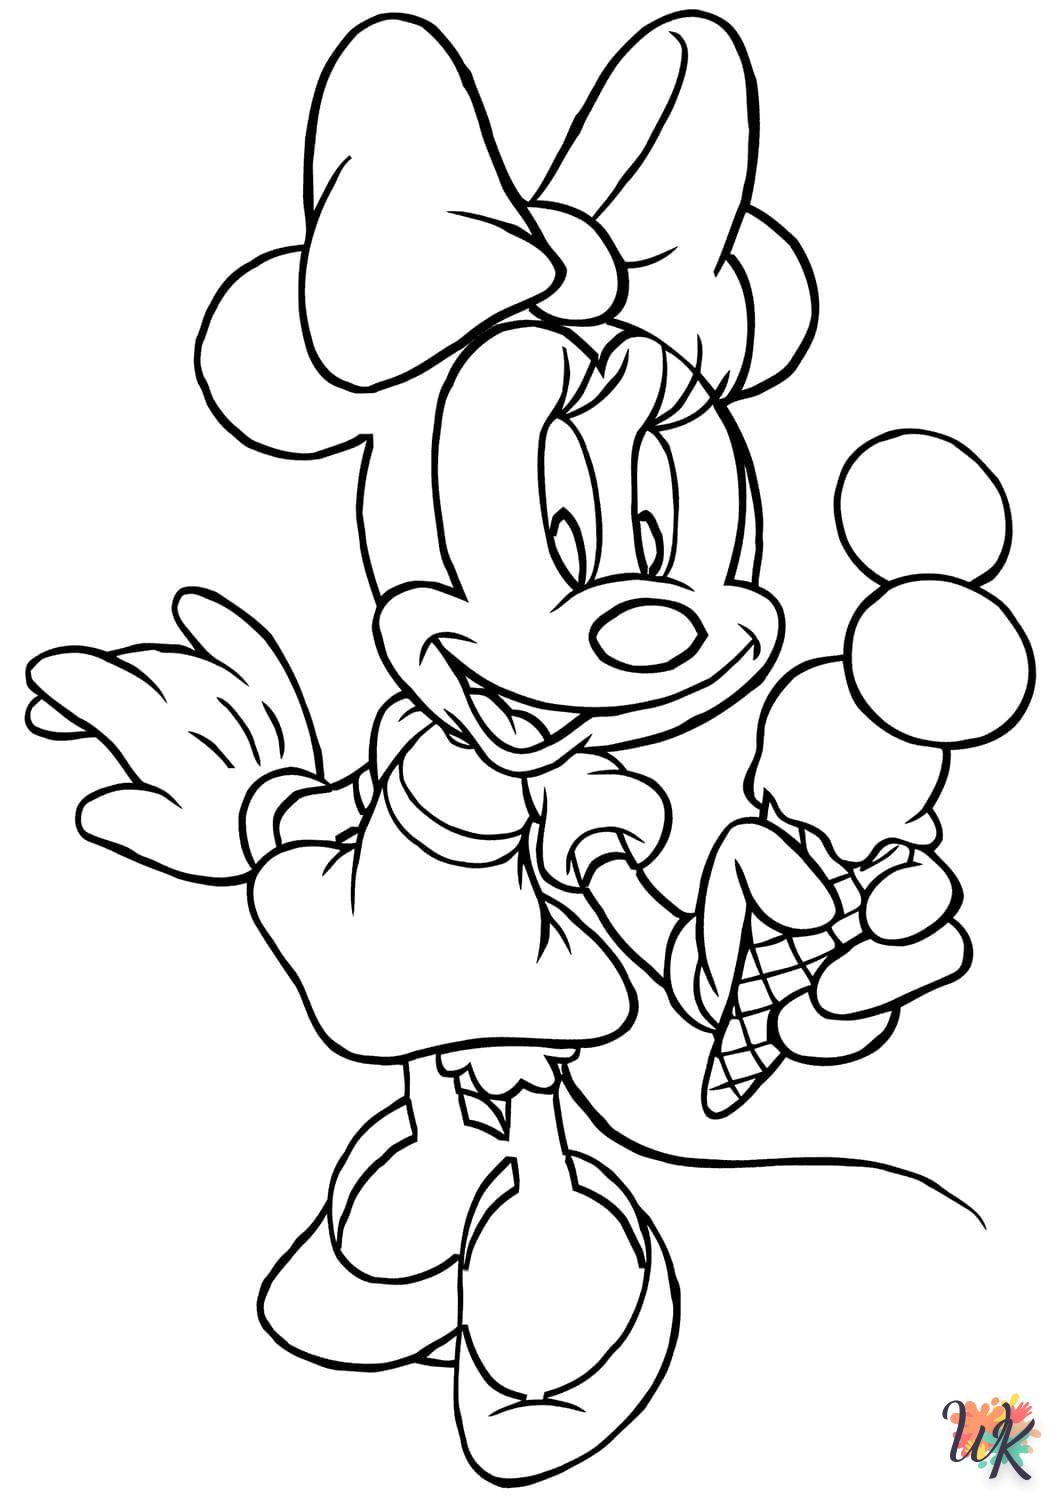 Minnie Mouse kleurplaten28